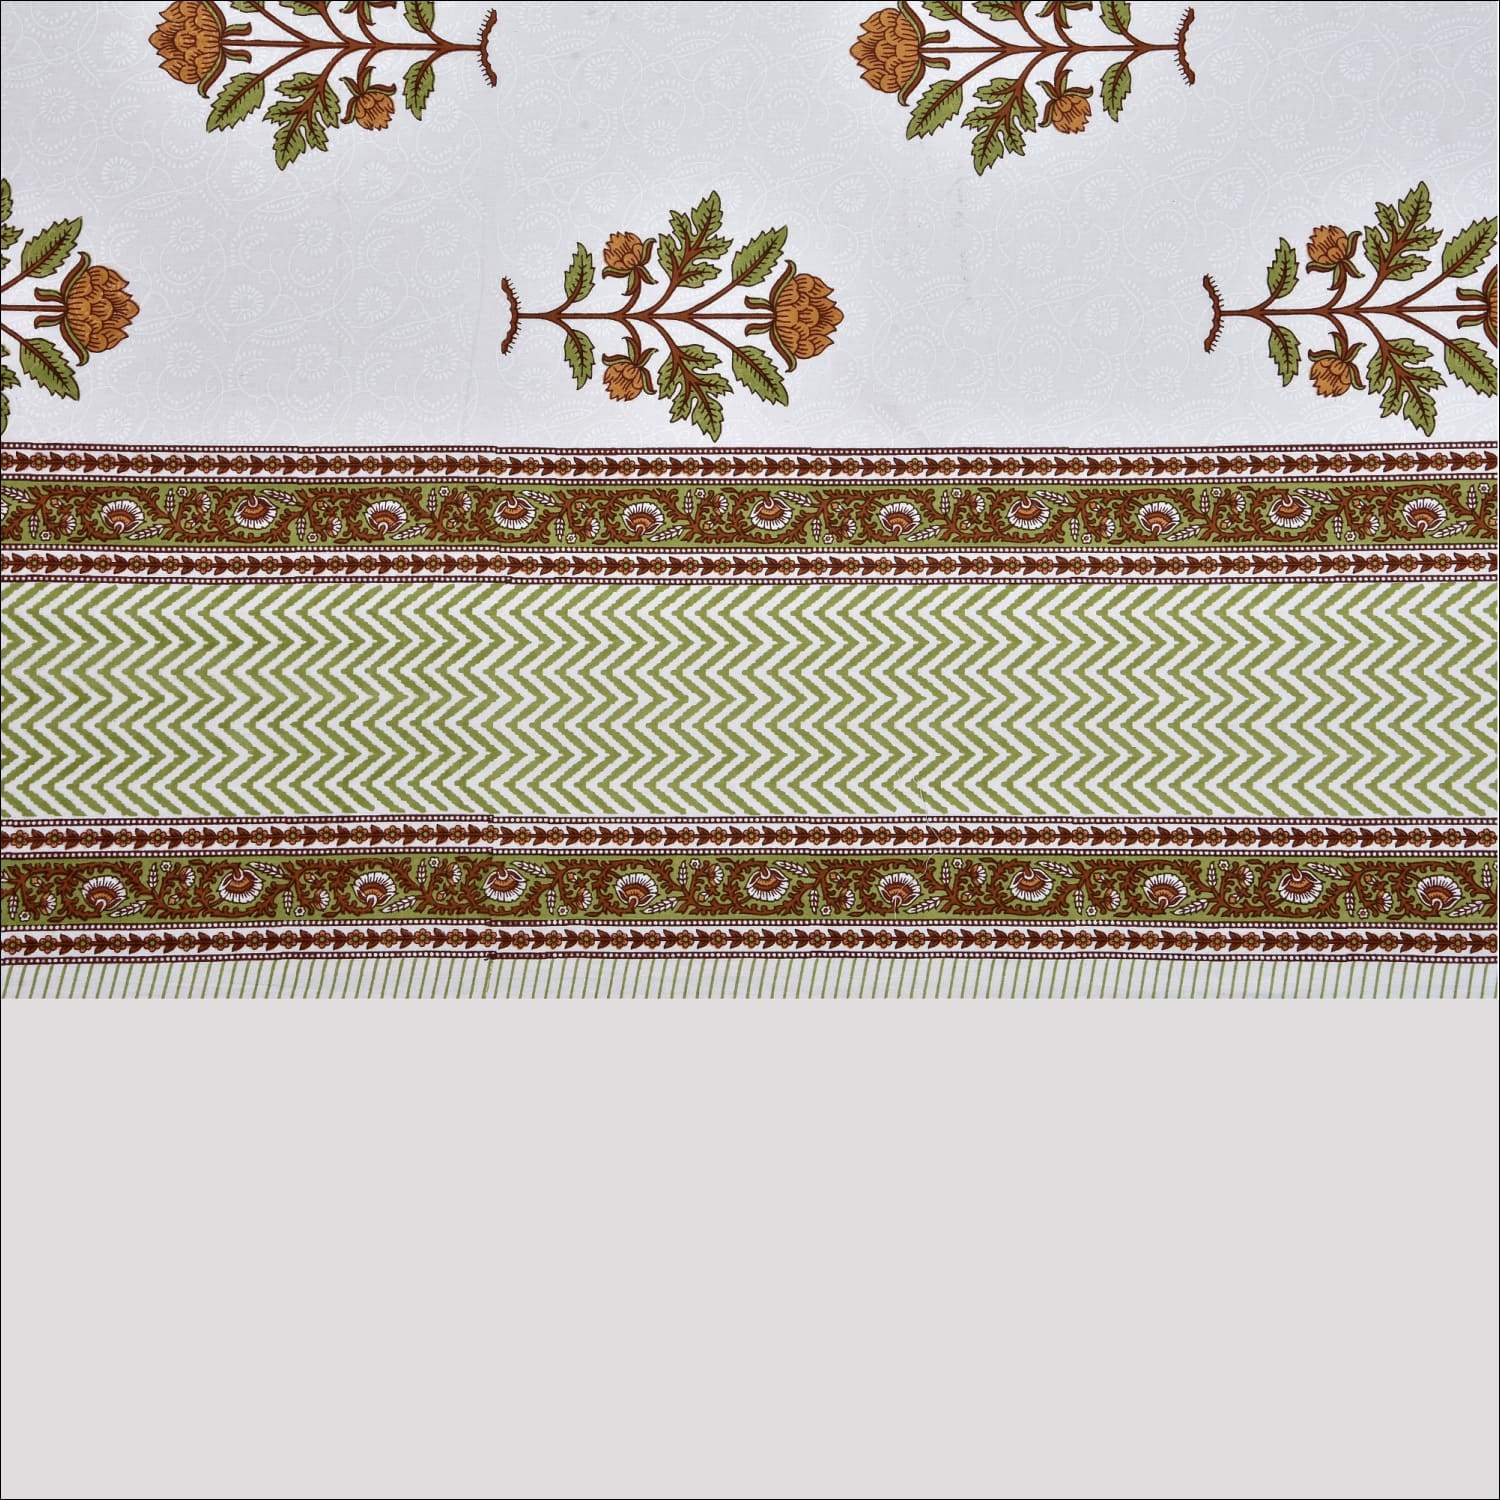 Tree Design Cotton Jaipuri Bedsheet (Double Bed)